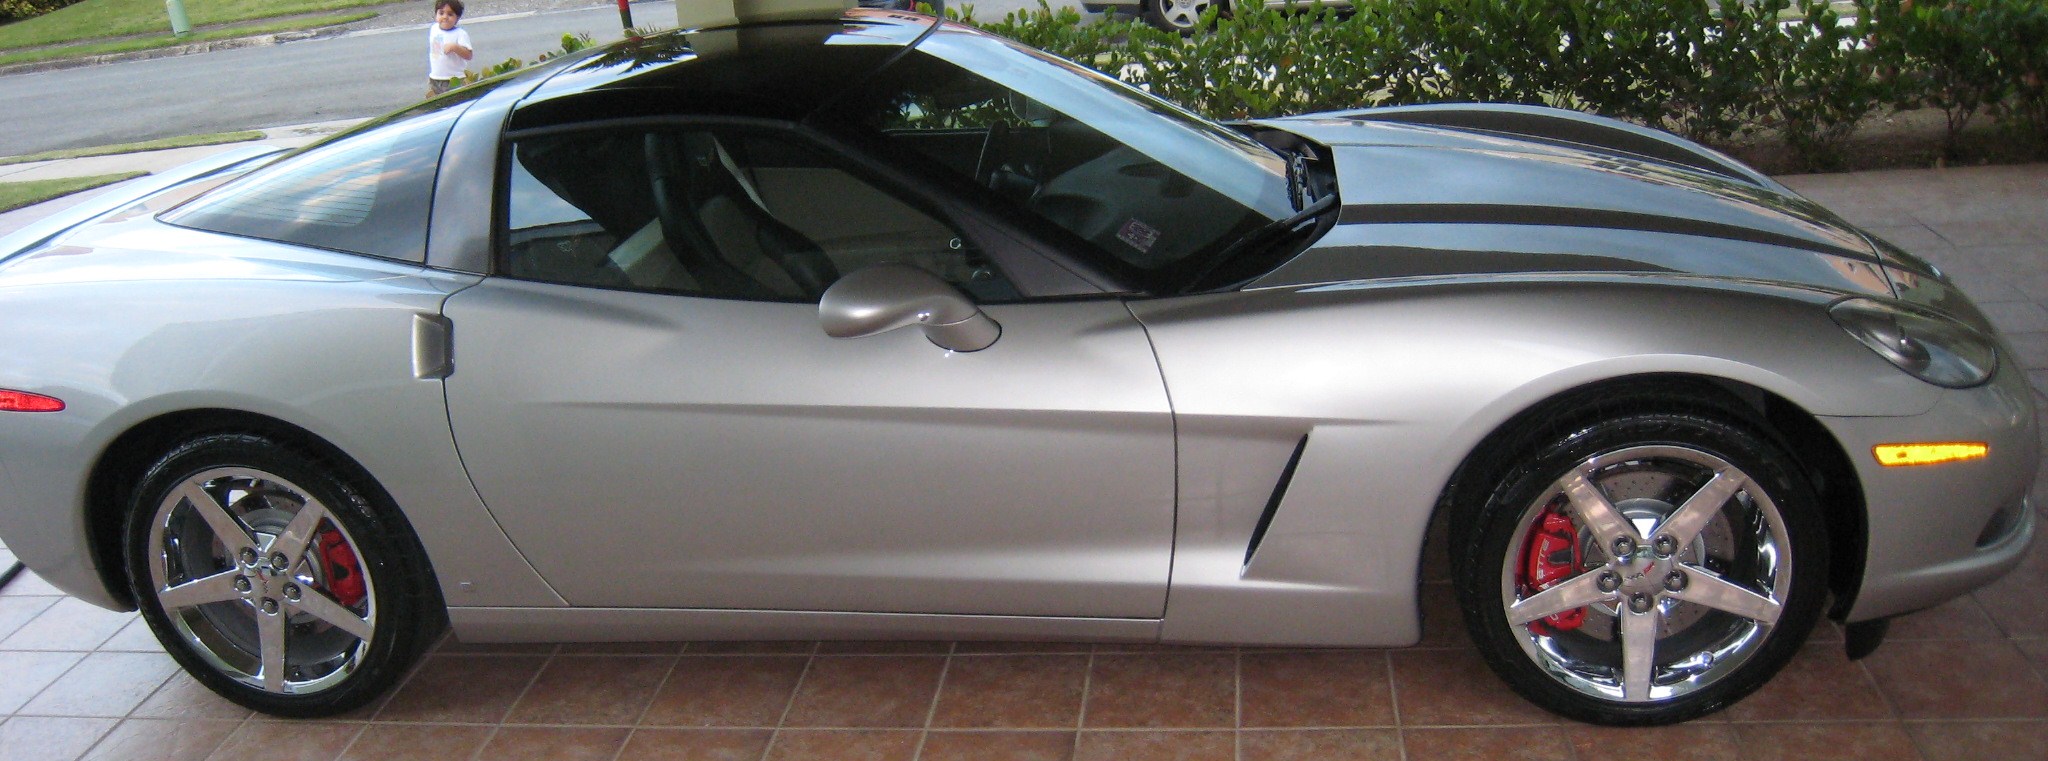 2008  Chevrolet Corvette ls3 automatic 6speed picture, mods, upgrades